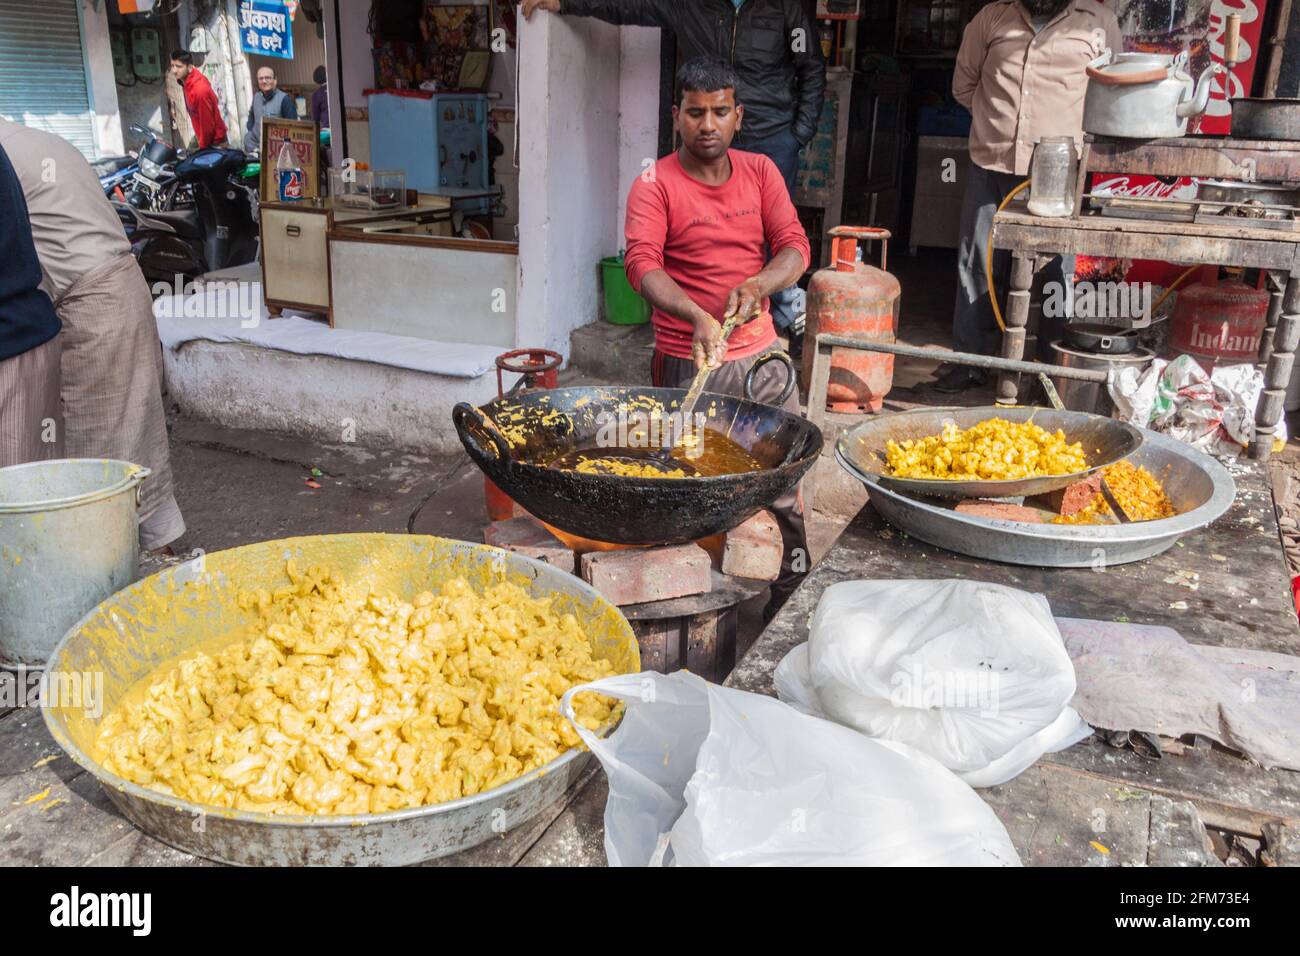 AMRITSAR, INDIA - JANUARY 26, 2017: Cauliflower being fried on a street in Amritsar, Punjab, India Stock Photo